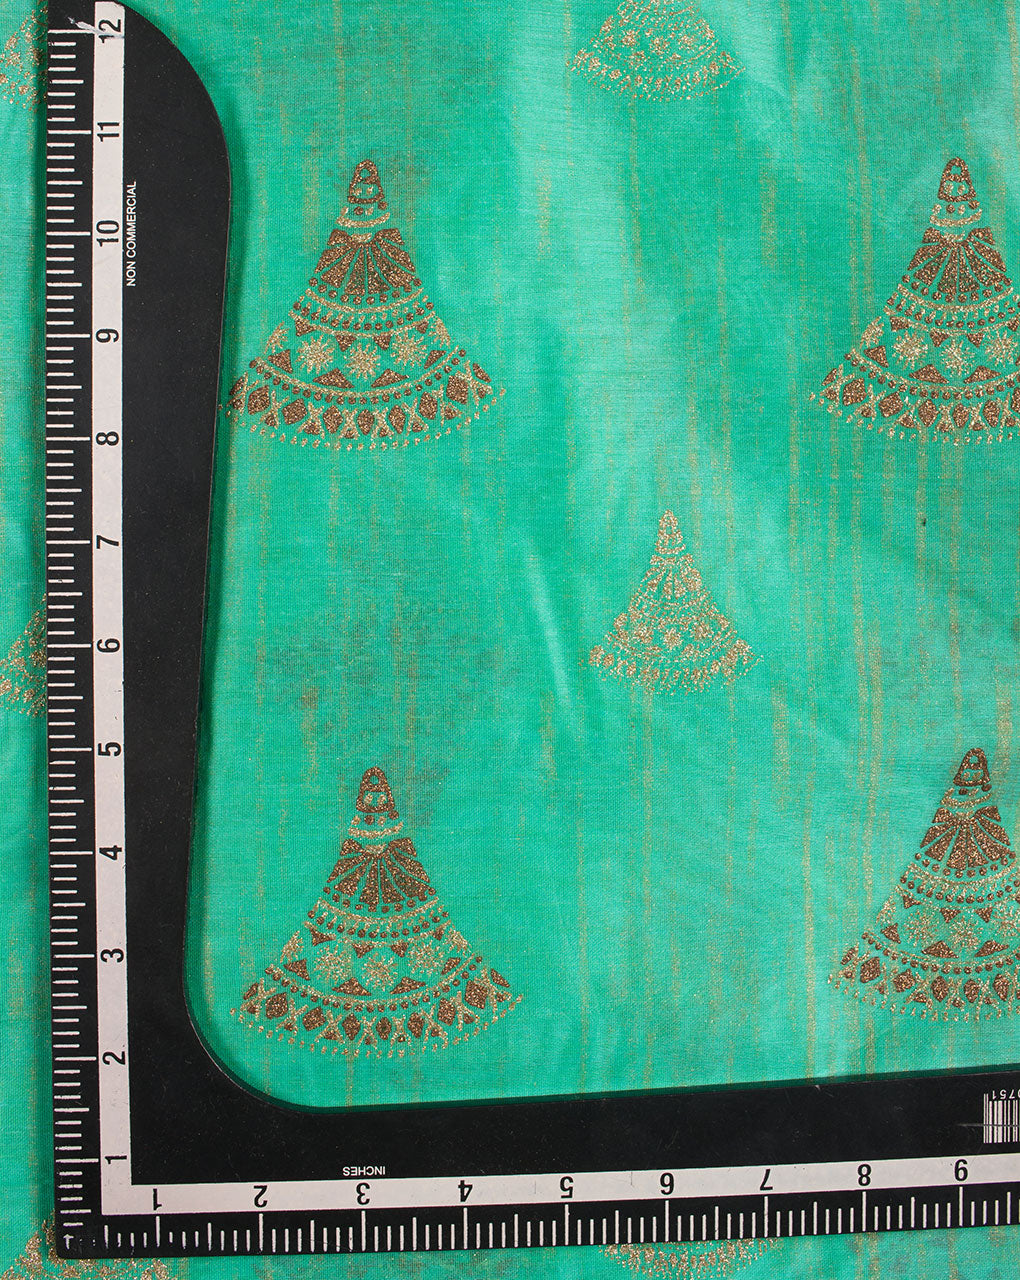 Traditional Foil Screen Print Chanderi Fabric - Fabriclore.com